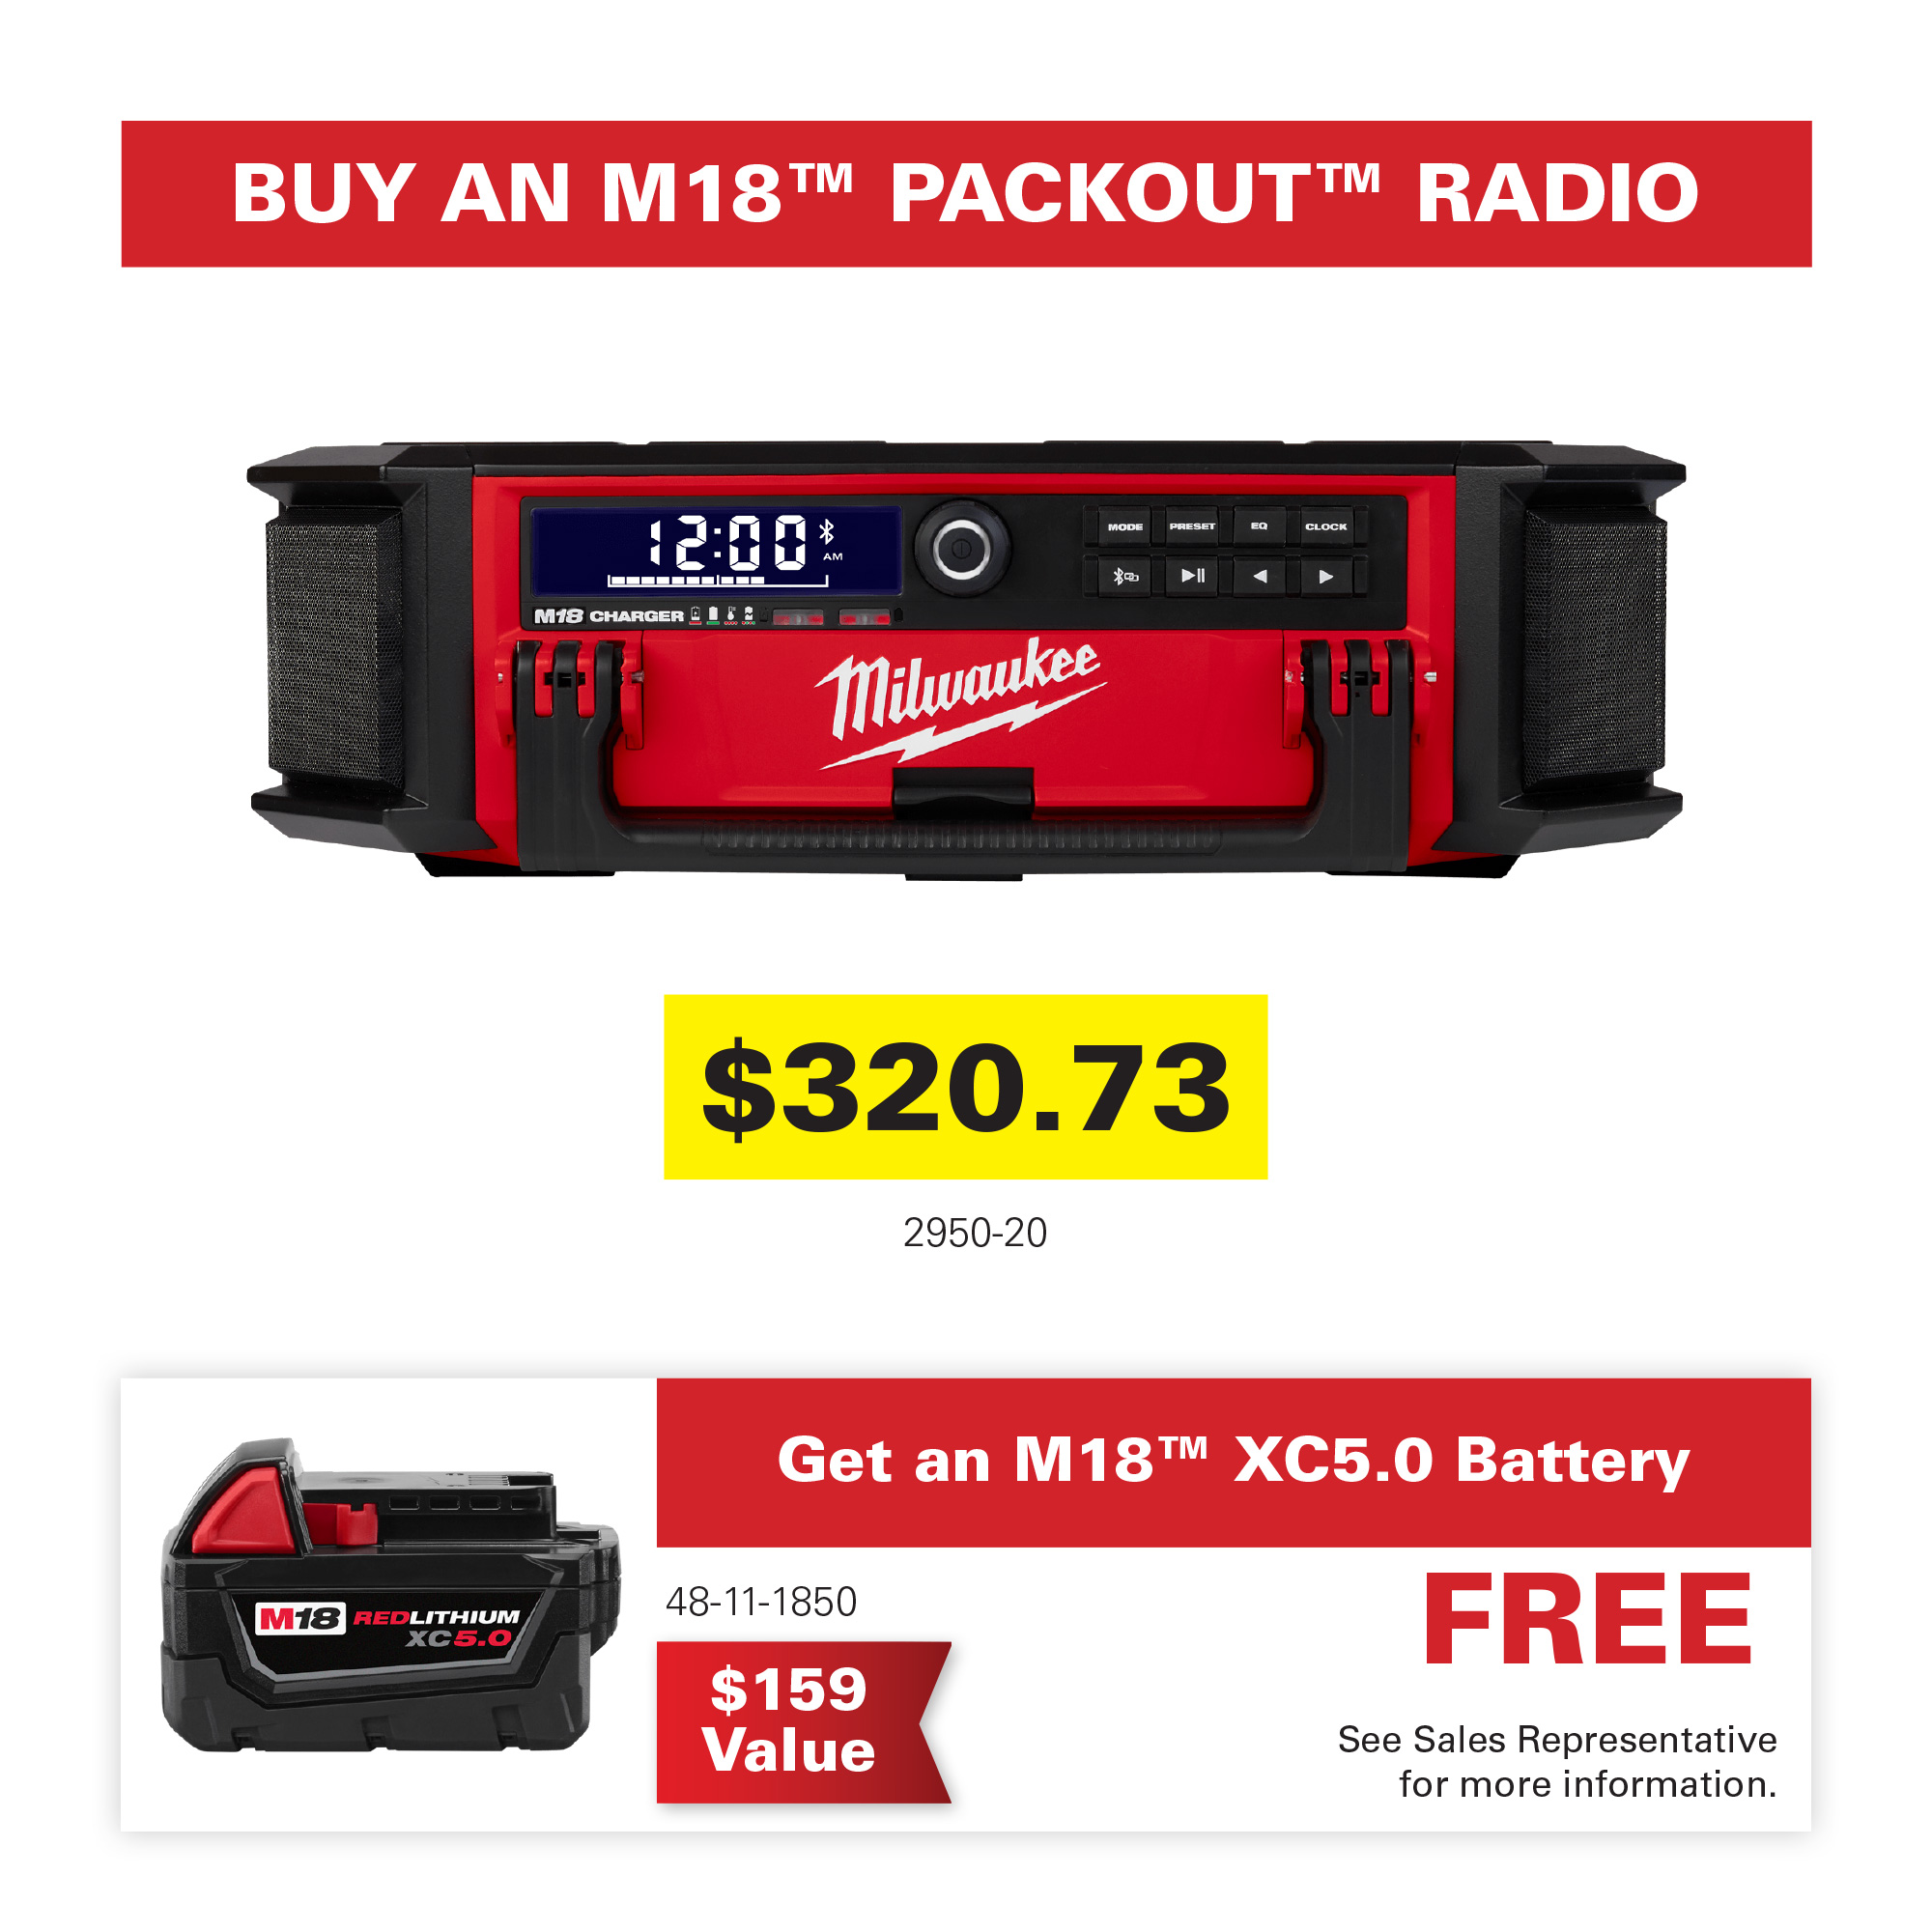 Milwaukee M18 Packout Radio Promo